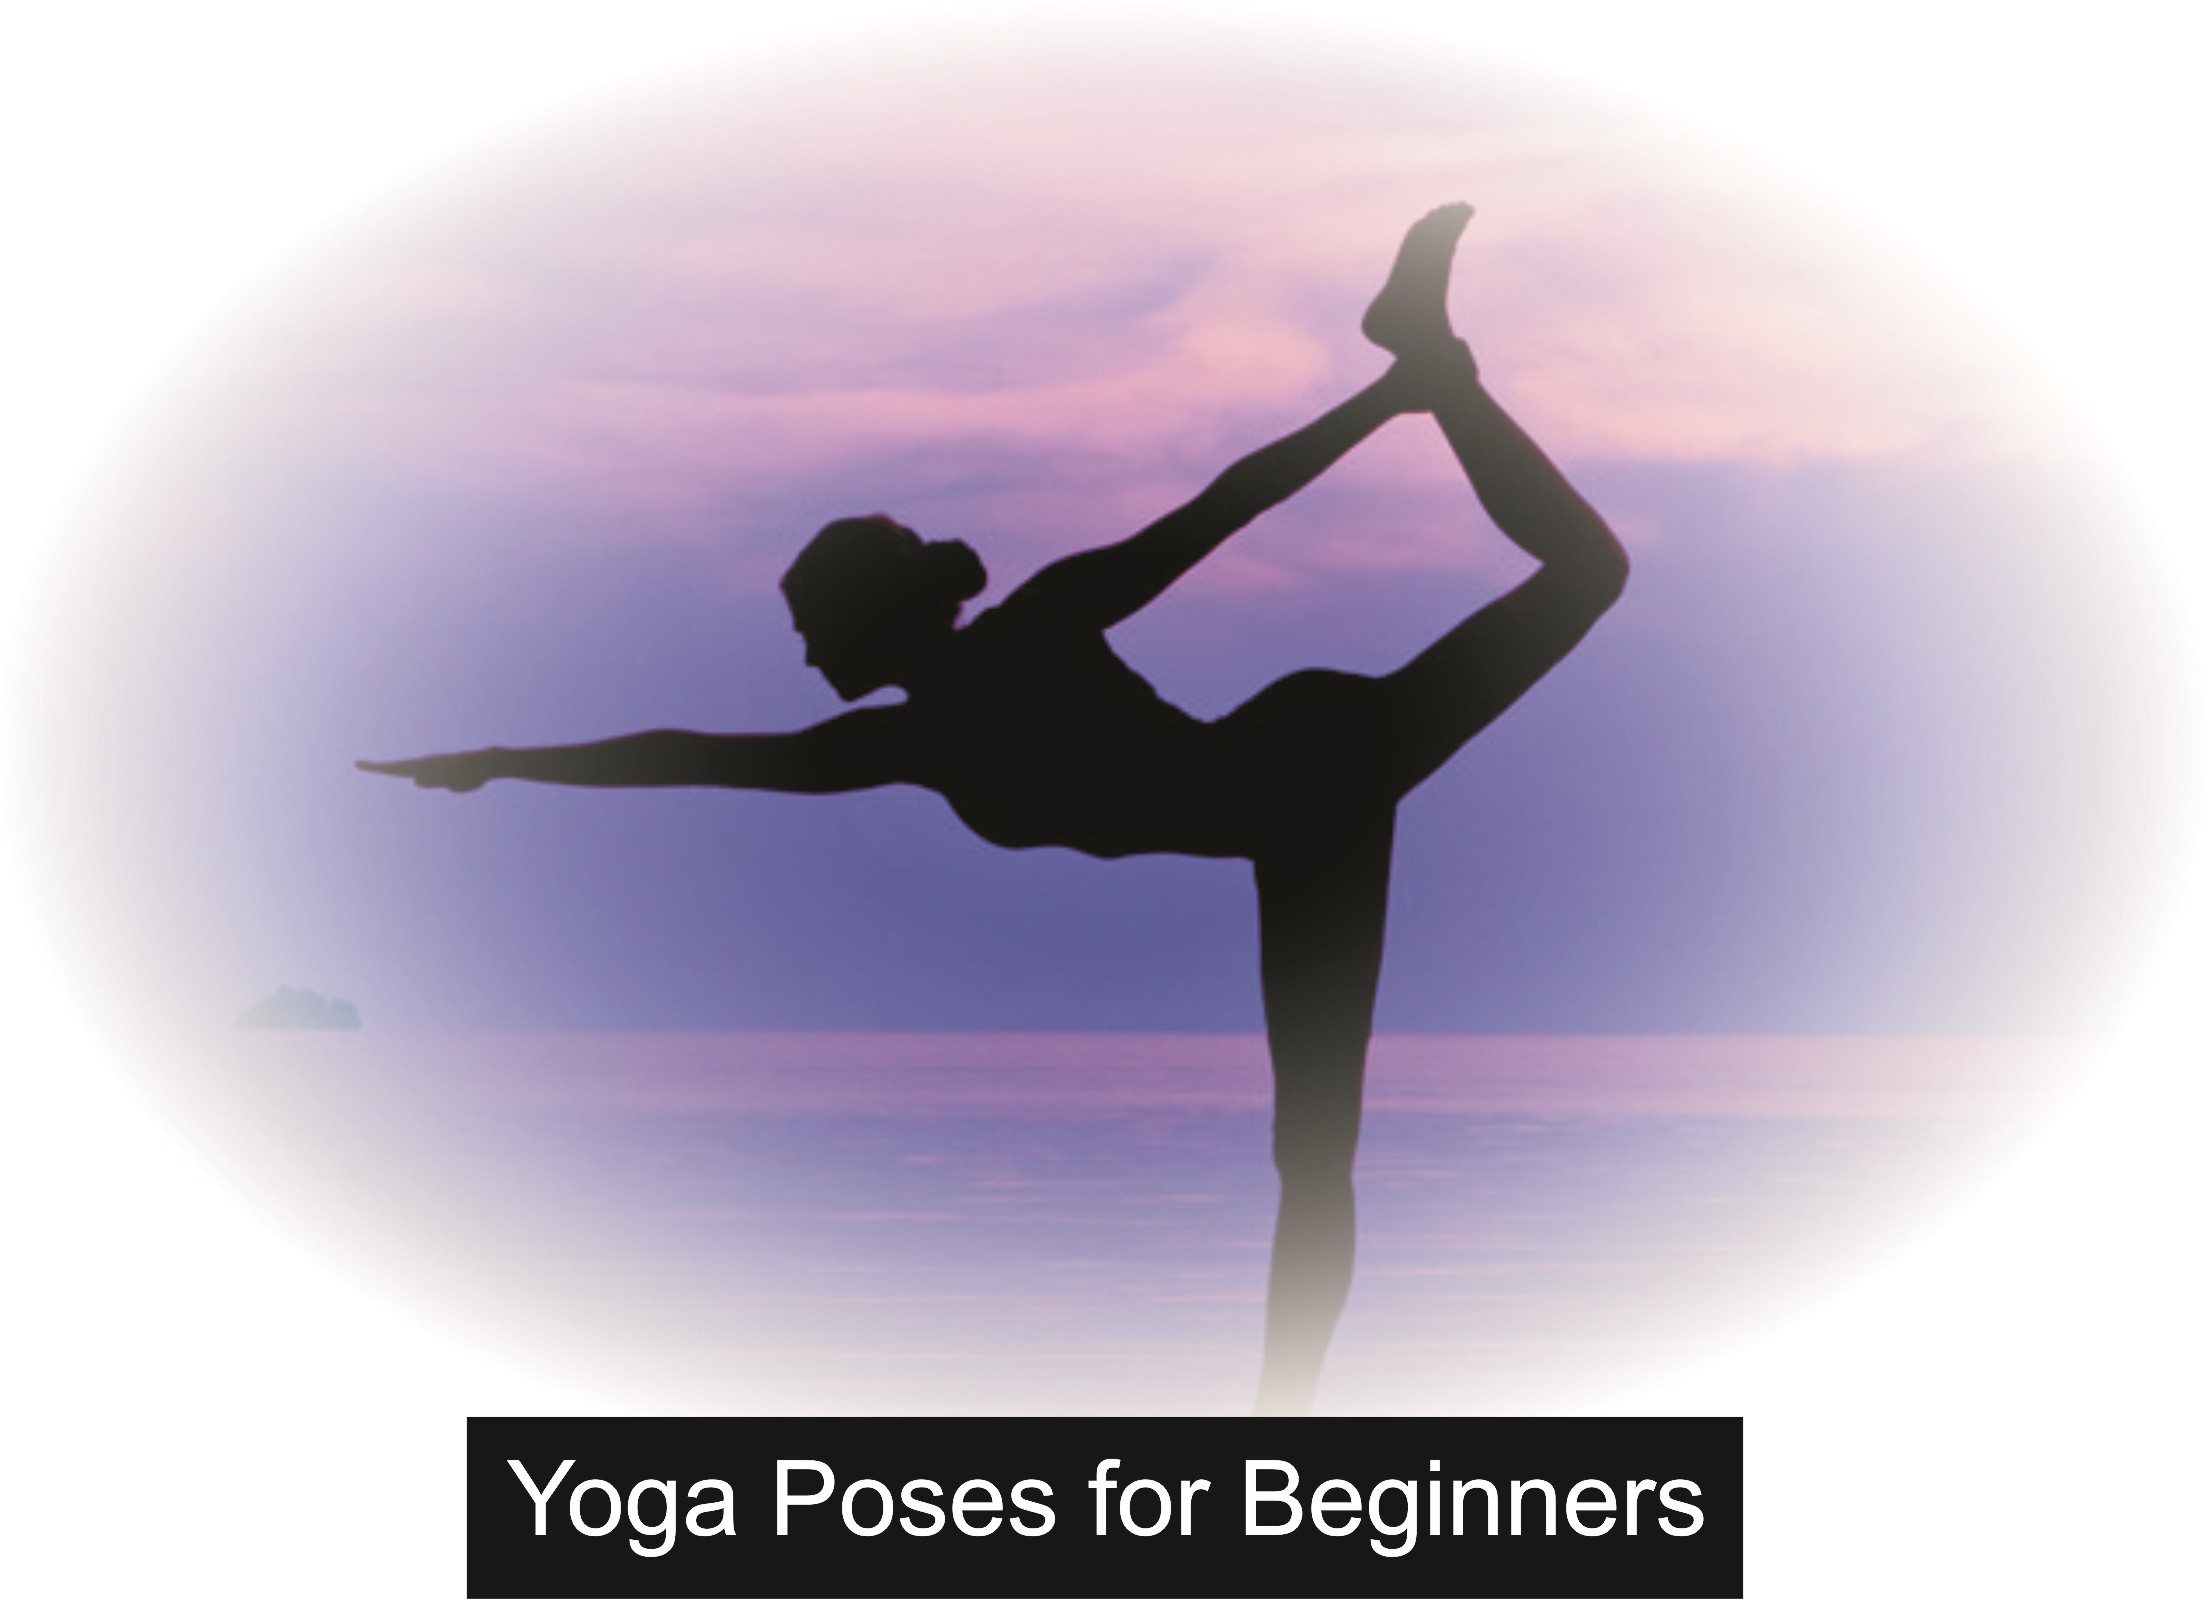 Yoga poses for a new Yogi